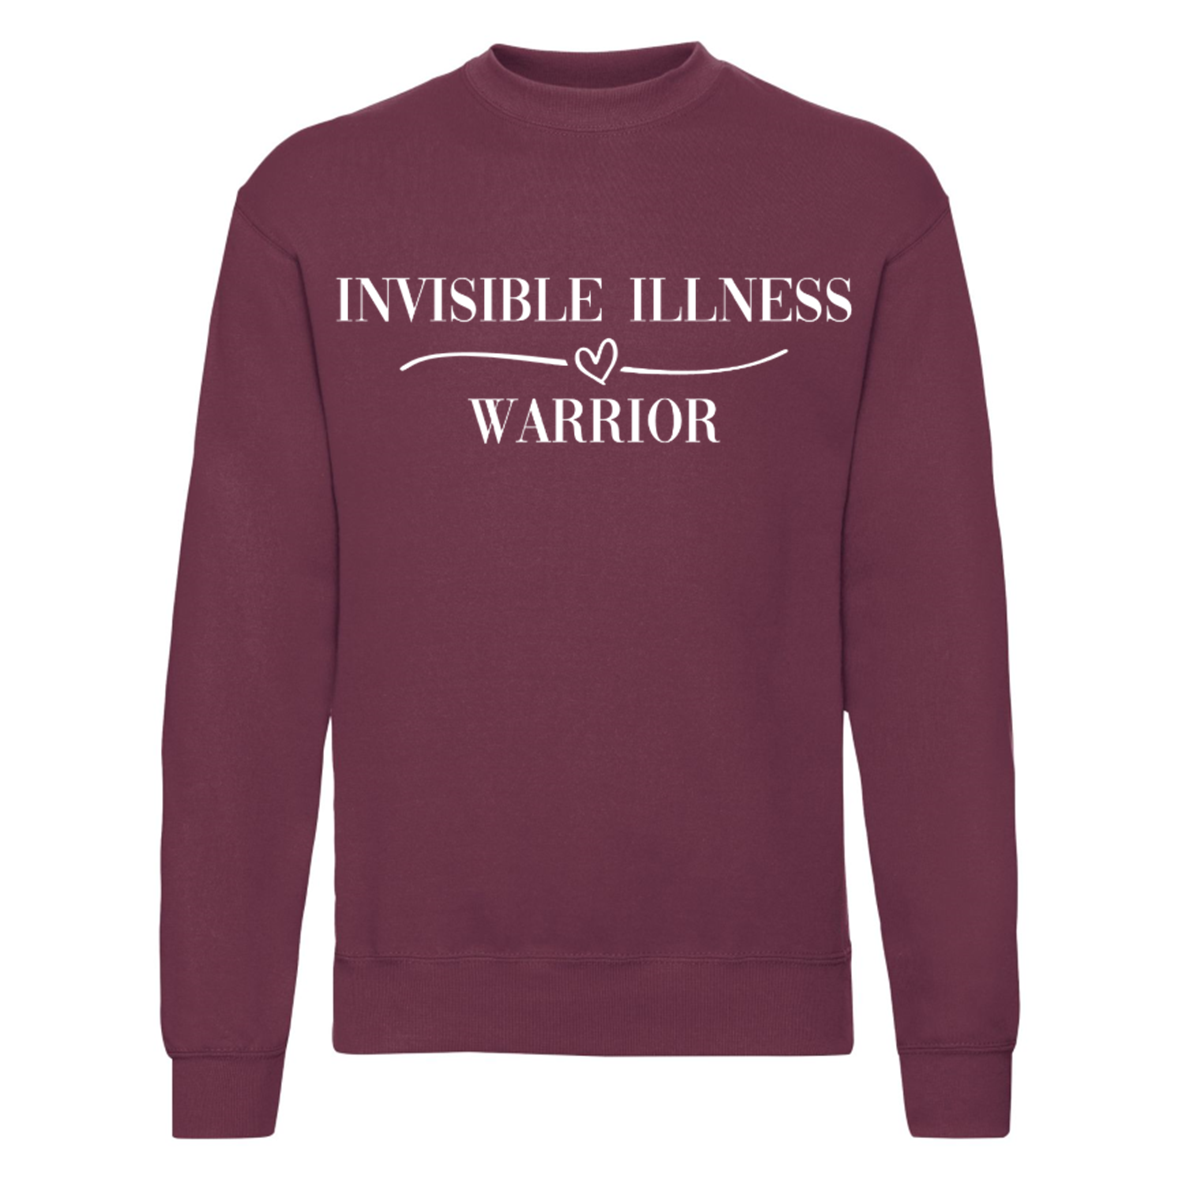 Invisible Illness Warrior Sweatshirt